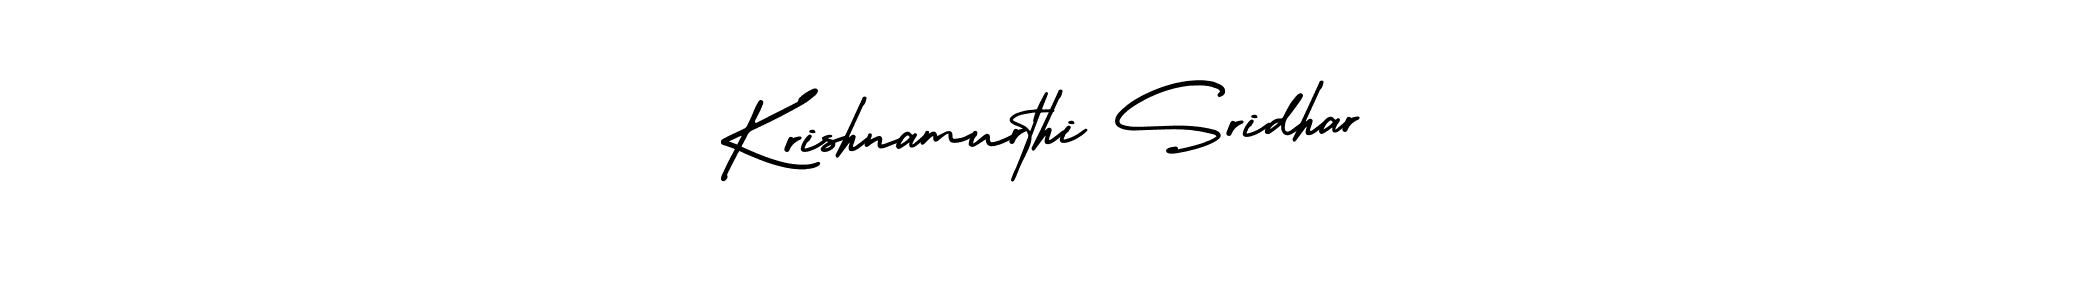 Best and Professional Signature Style for Krishnamurthi Sridhar. AmerikaSignatureDemo-Regular Best Signature Style Collection. Krishnamurthi Sridhar signature style 3 images and pictures png